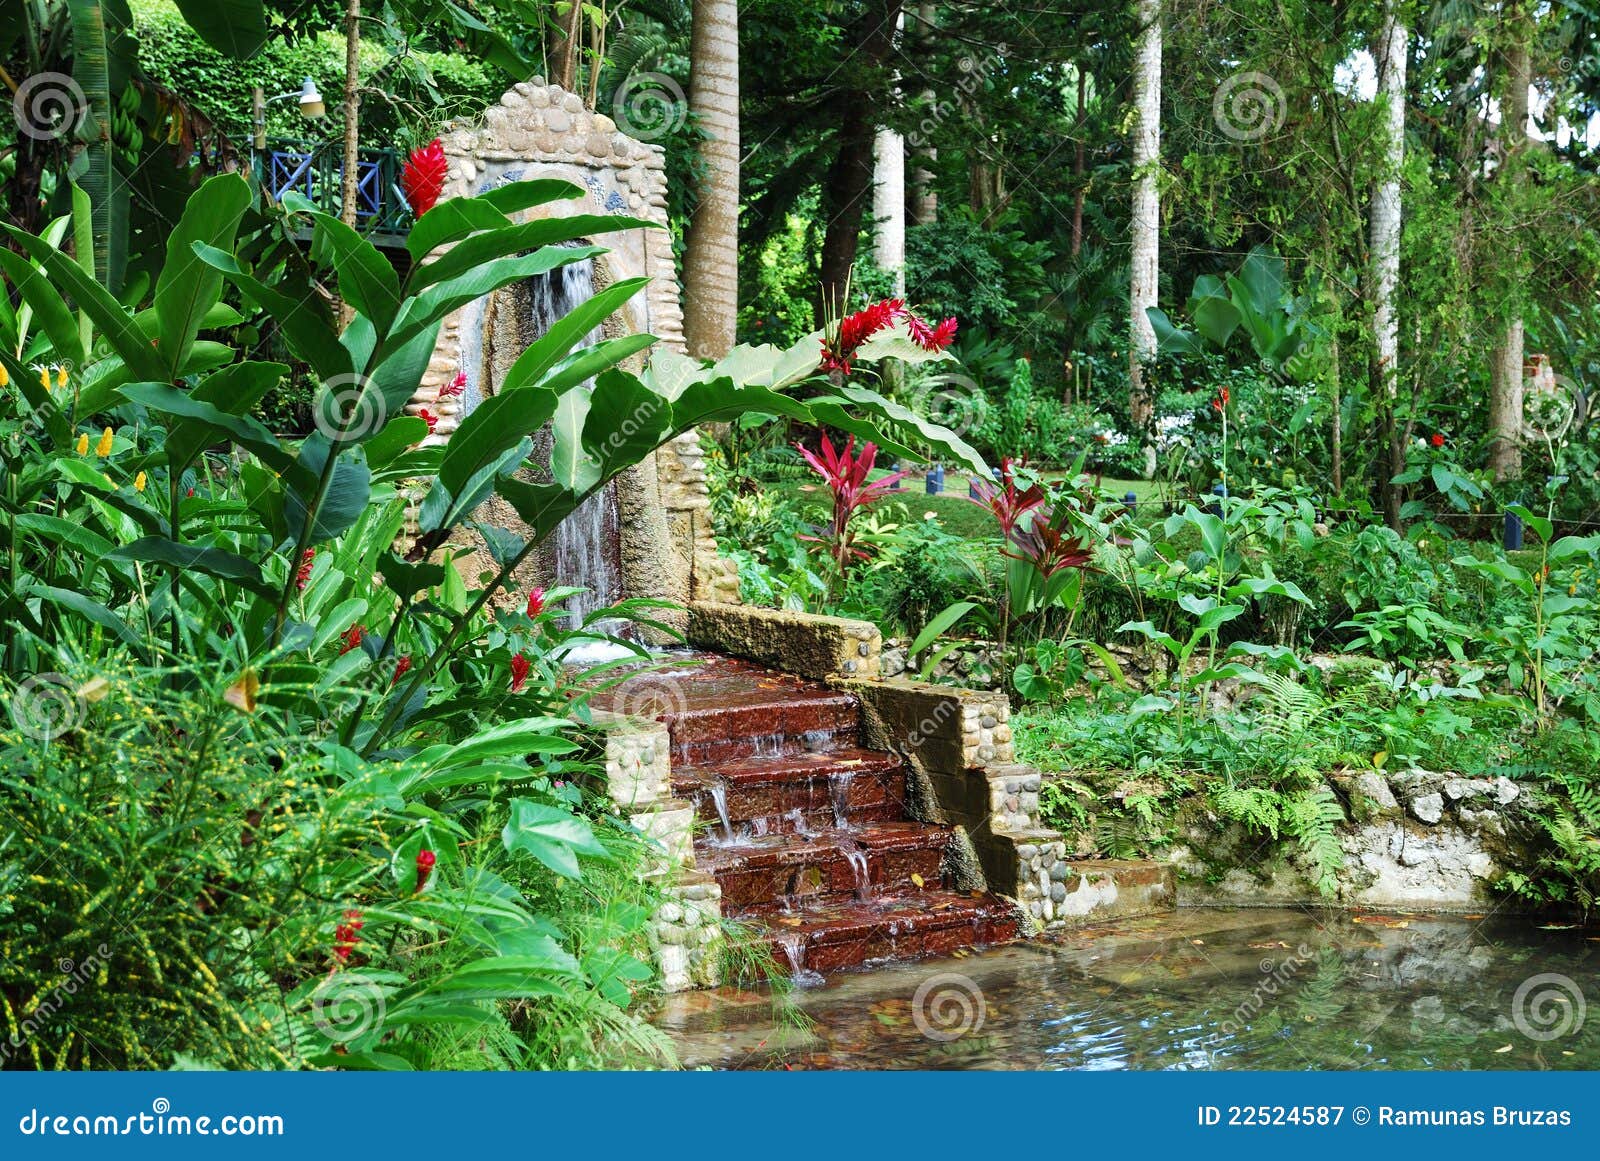 Jamaica S Gardens Stock Image Image Of Tourism Water 22524587